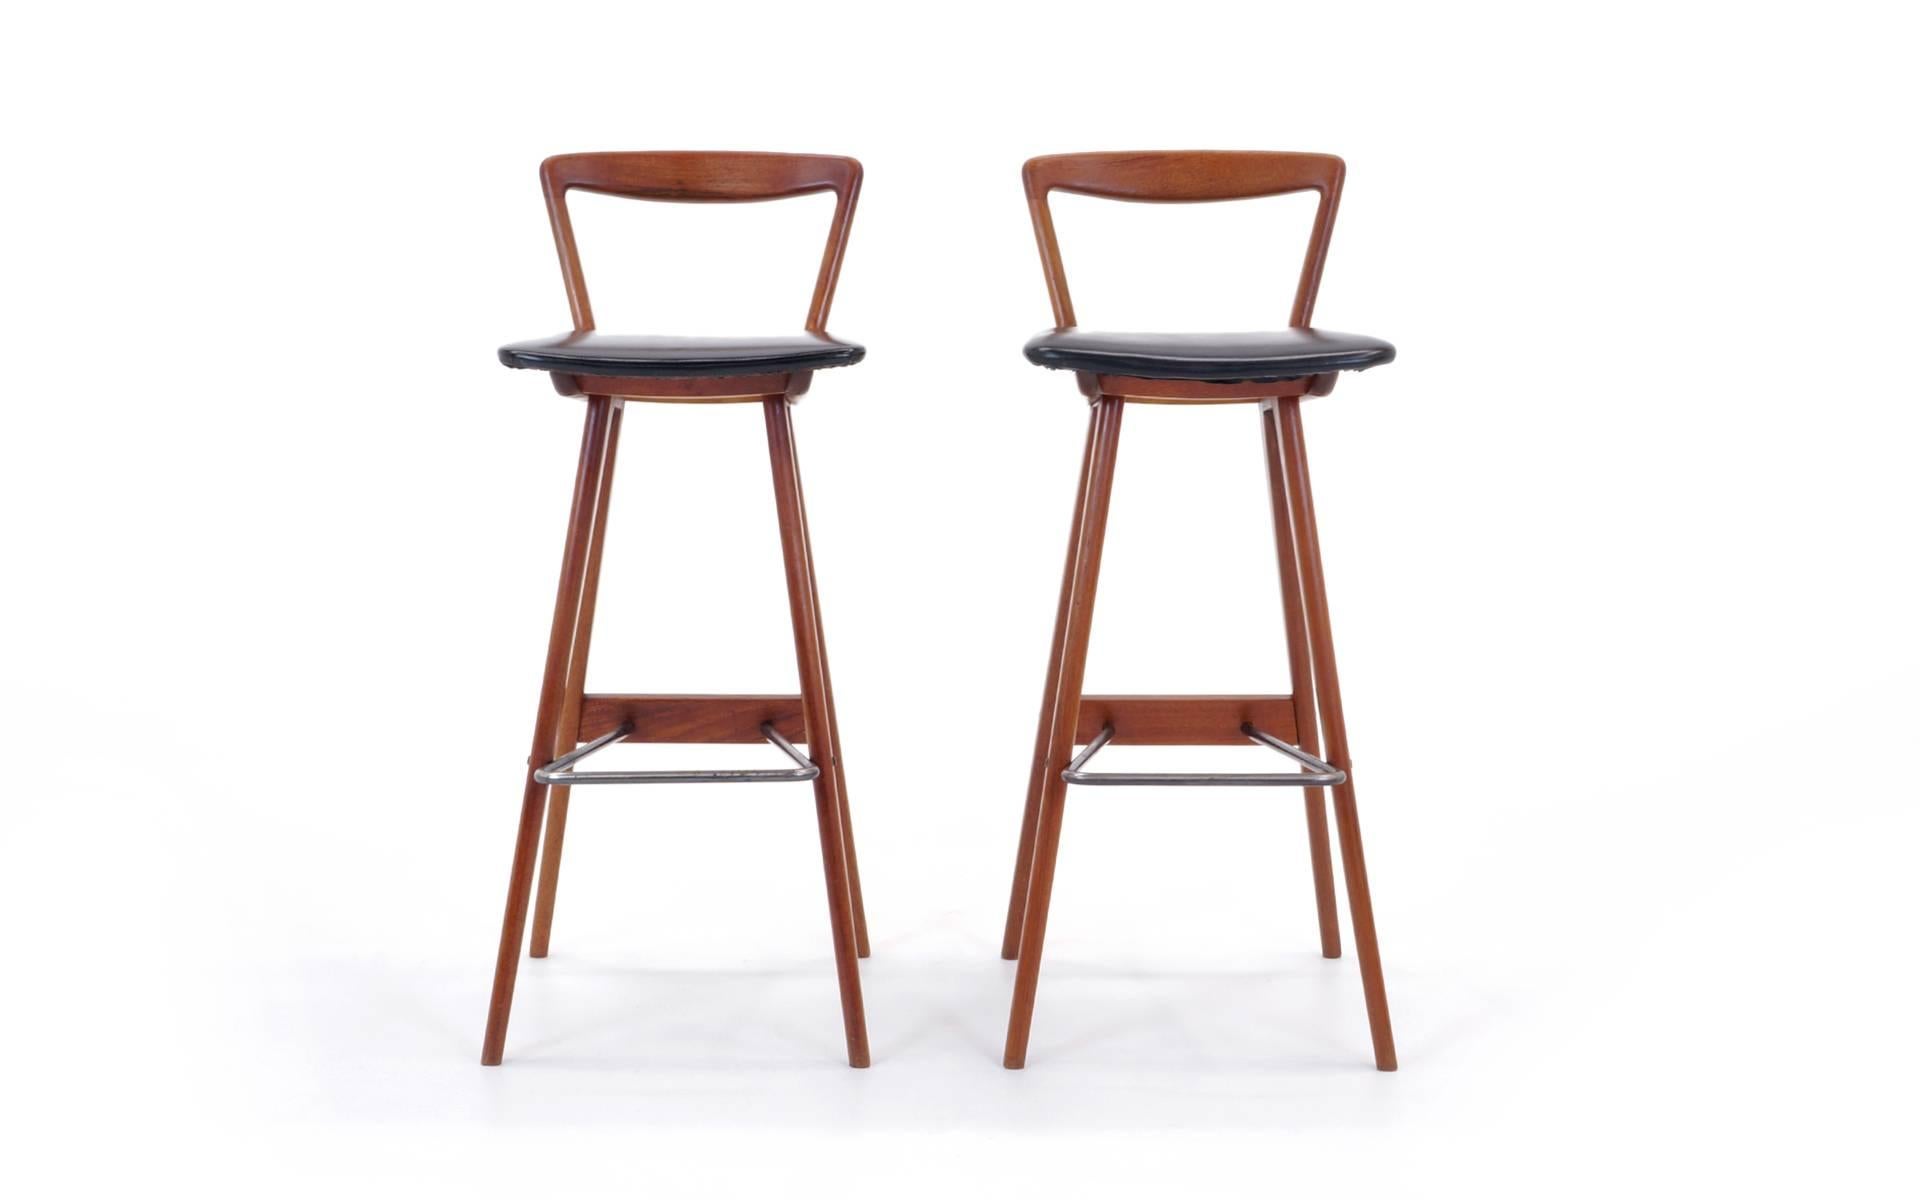 Pair of sculptural teak bar stools designed by Hansen for Brande Møbelindustri. Original oiled teak finish in excellent condition. Rare and beautiful set.